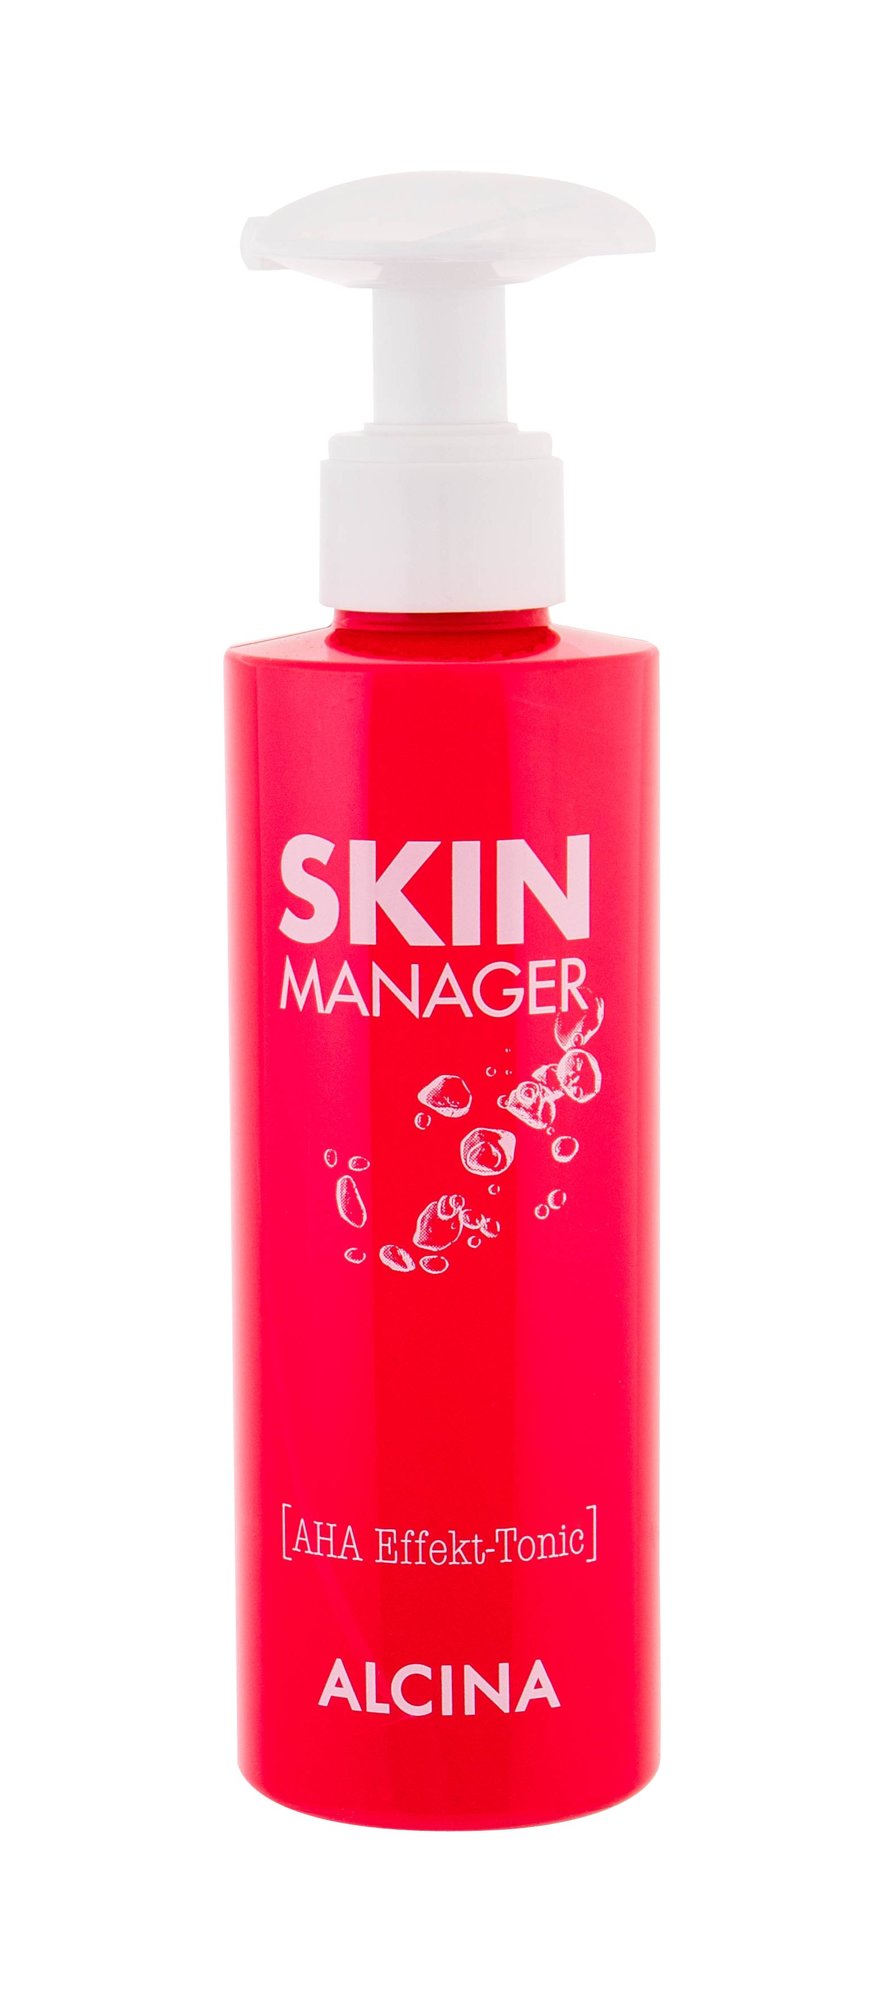 ALCINA Skin Manager AHA Effekt Tonic 190ml valomasis vanduo veidui